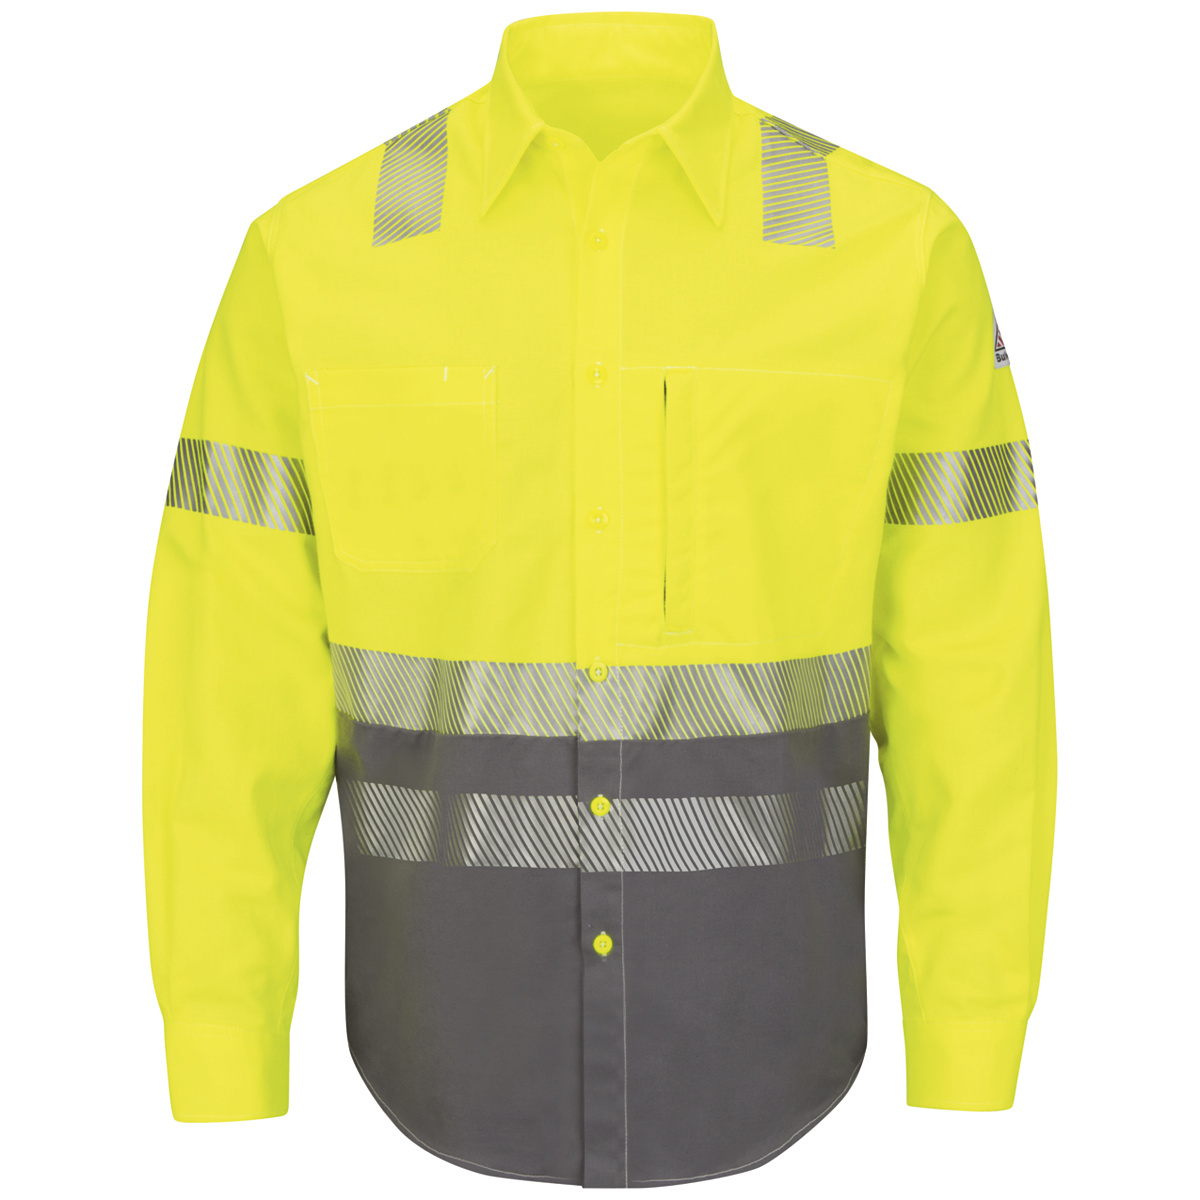 Bulwark® Medium Tall Hi-Viz Yellow And Gray Westex Ultrasoft®/Cotton/Nylon Hi-Visibility Flame Resistant Uniform Shirt With Butt